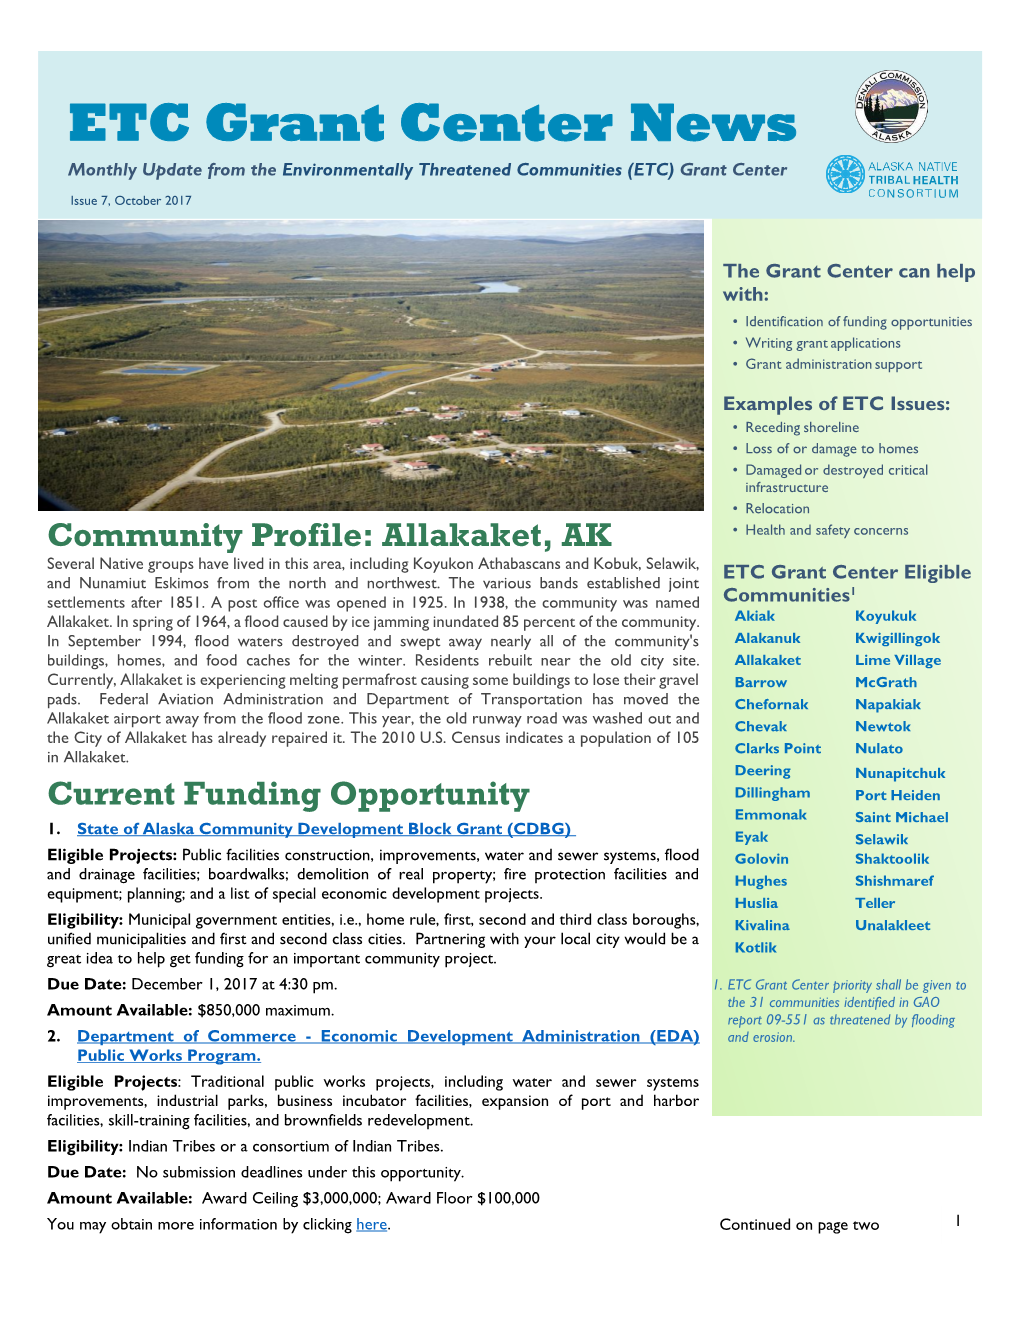 ETC Grant Center News Monthly Update from the Environmentally Threatened Communities (ETC) Grant Center